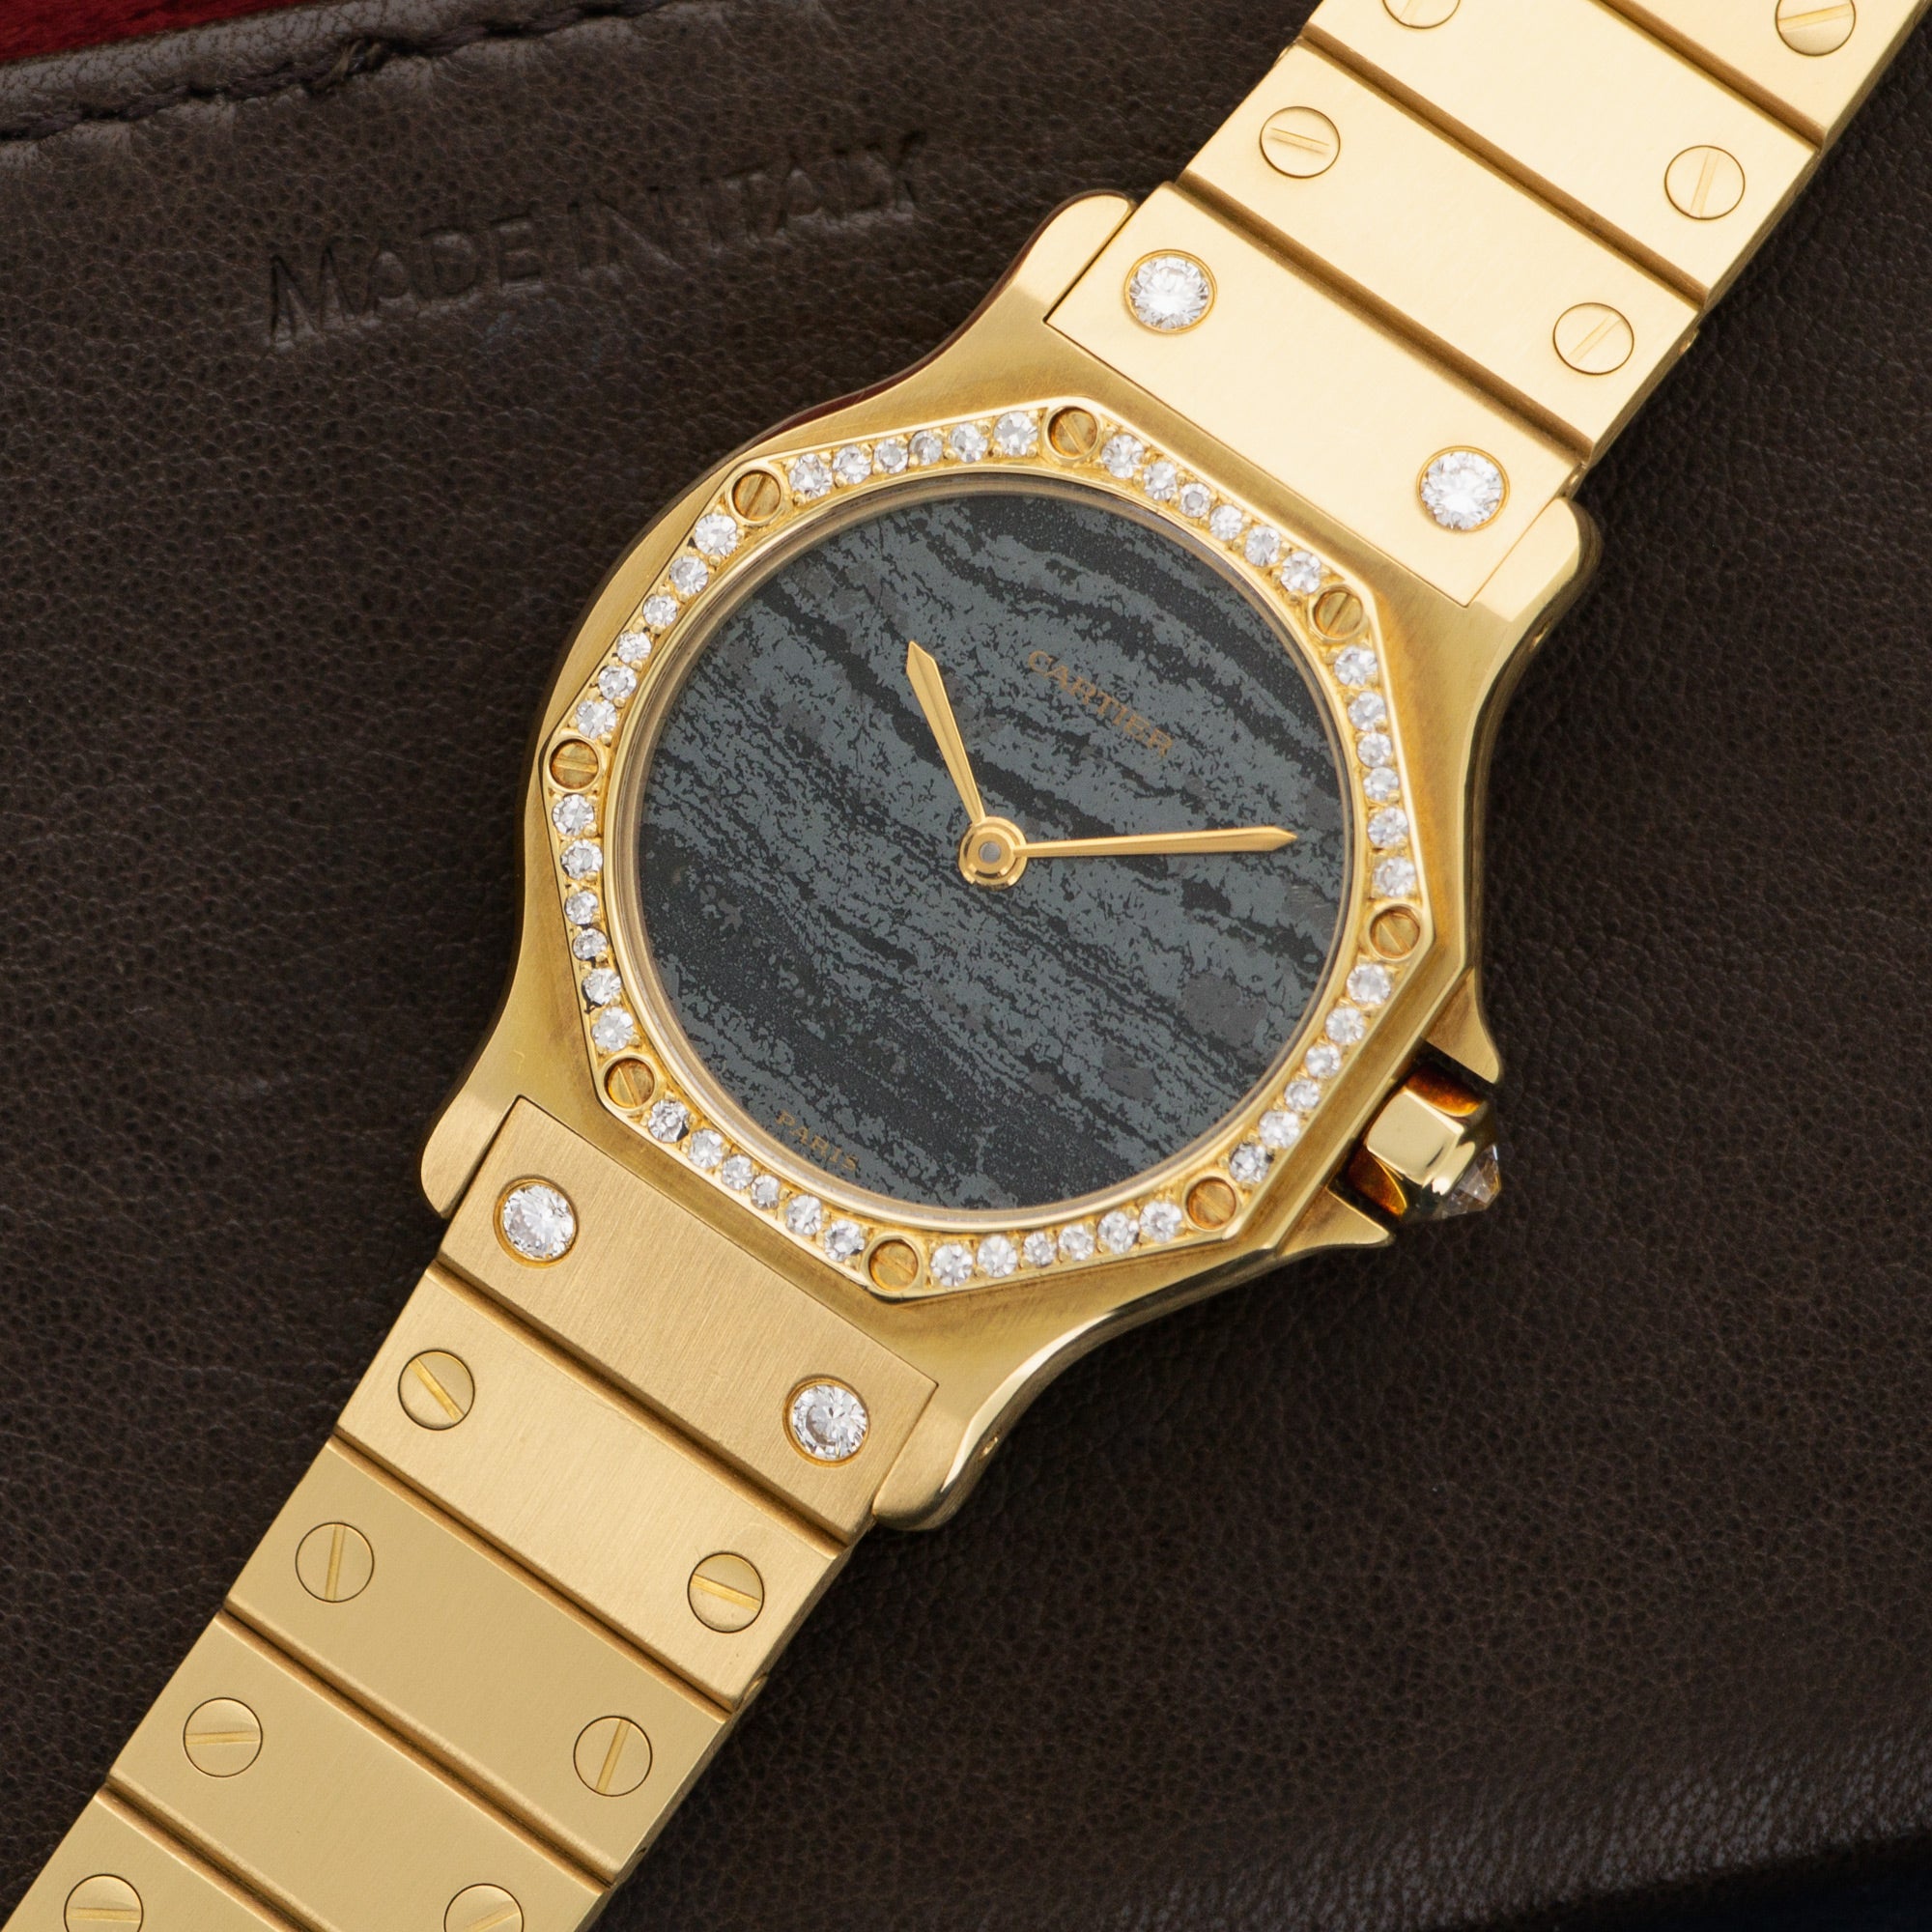 Cartier - Cartier Yellow Gold Santos Diamond & Stone Dial Watch - The Keystone Watches